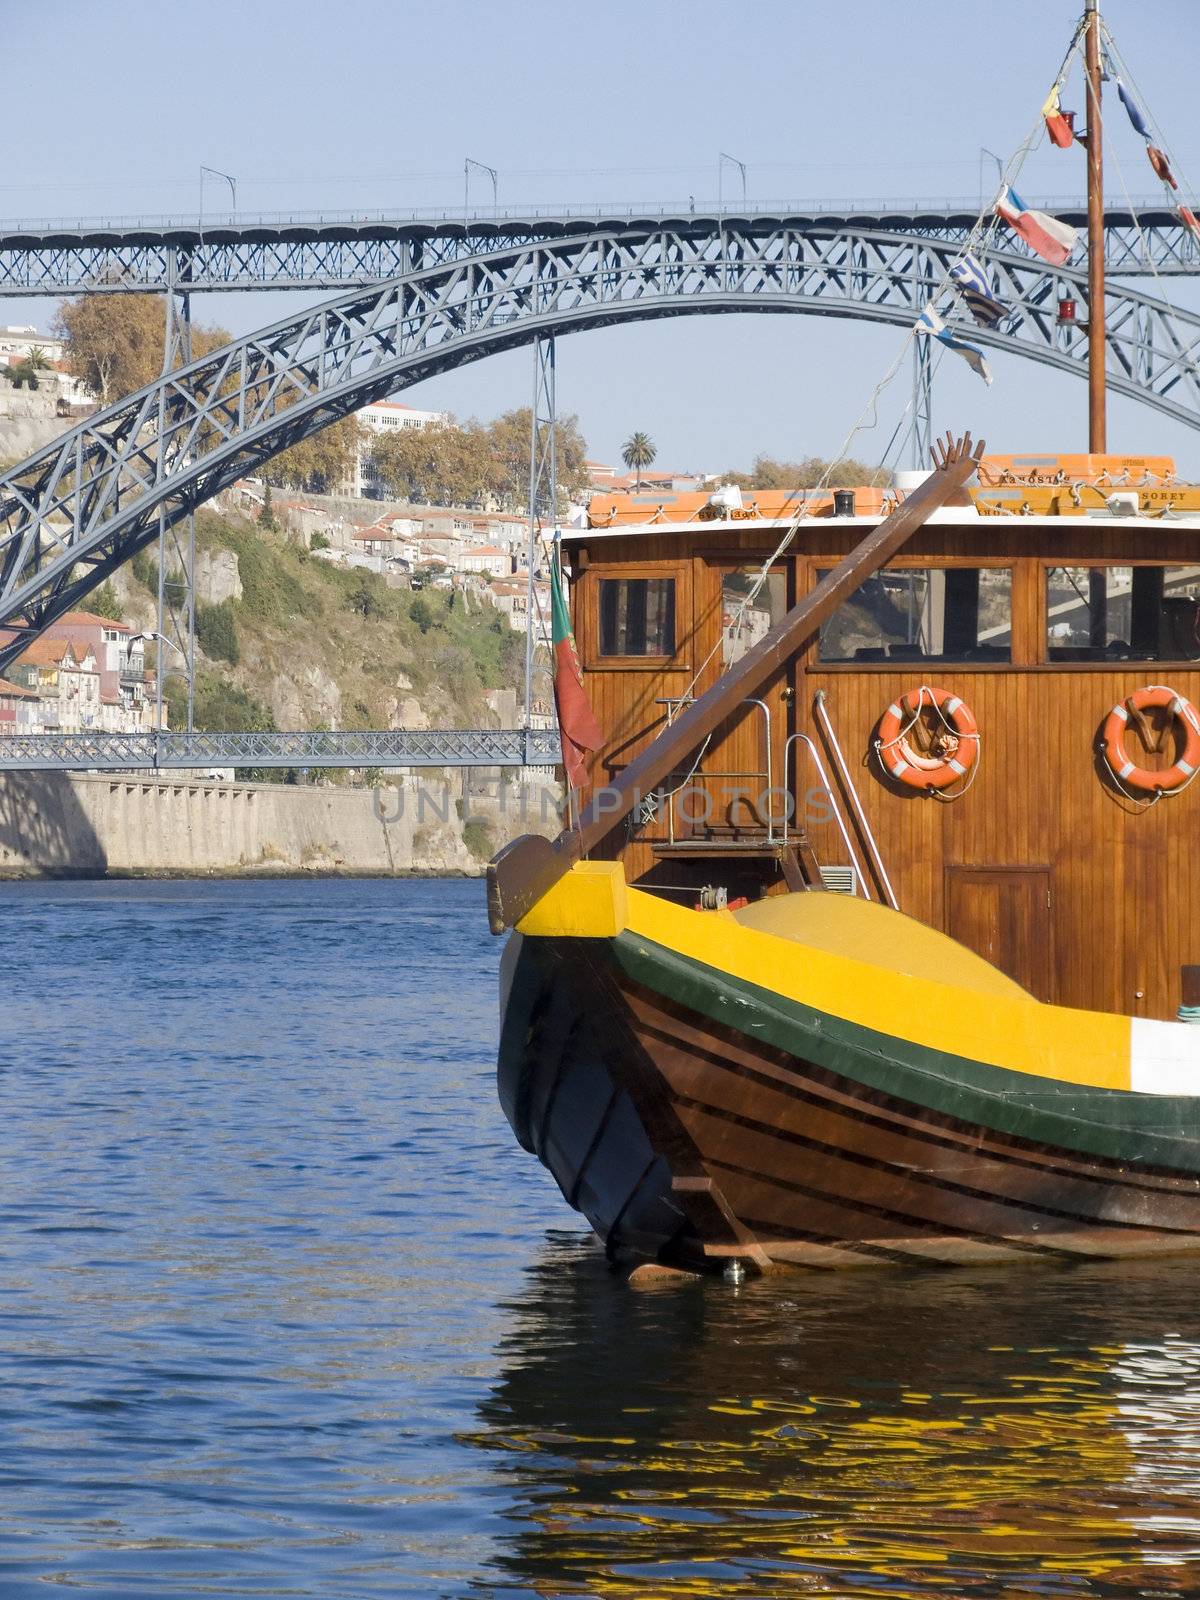 Tradicional boat at Porto by PauloResende